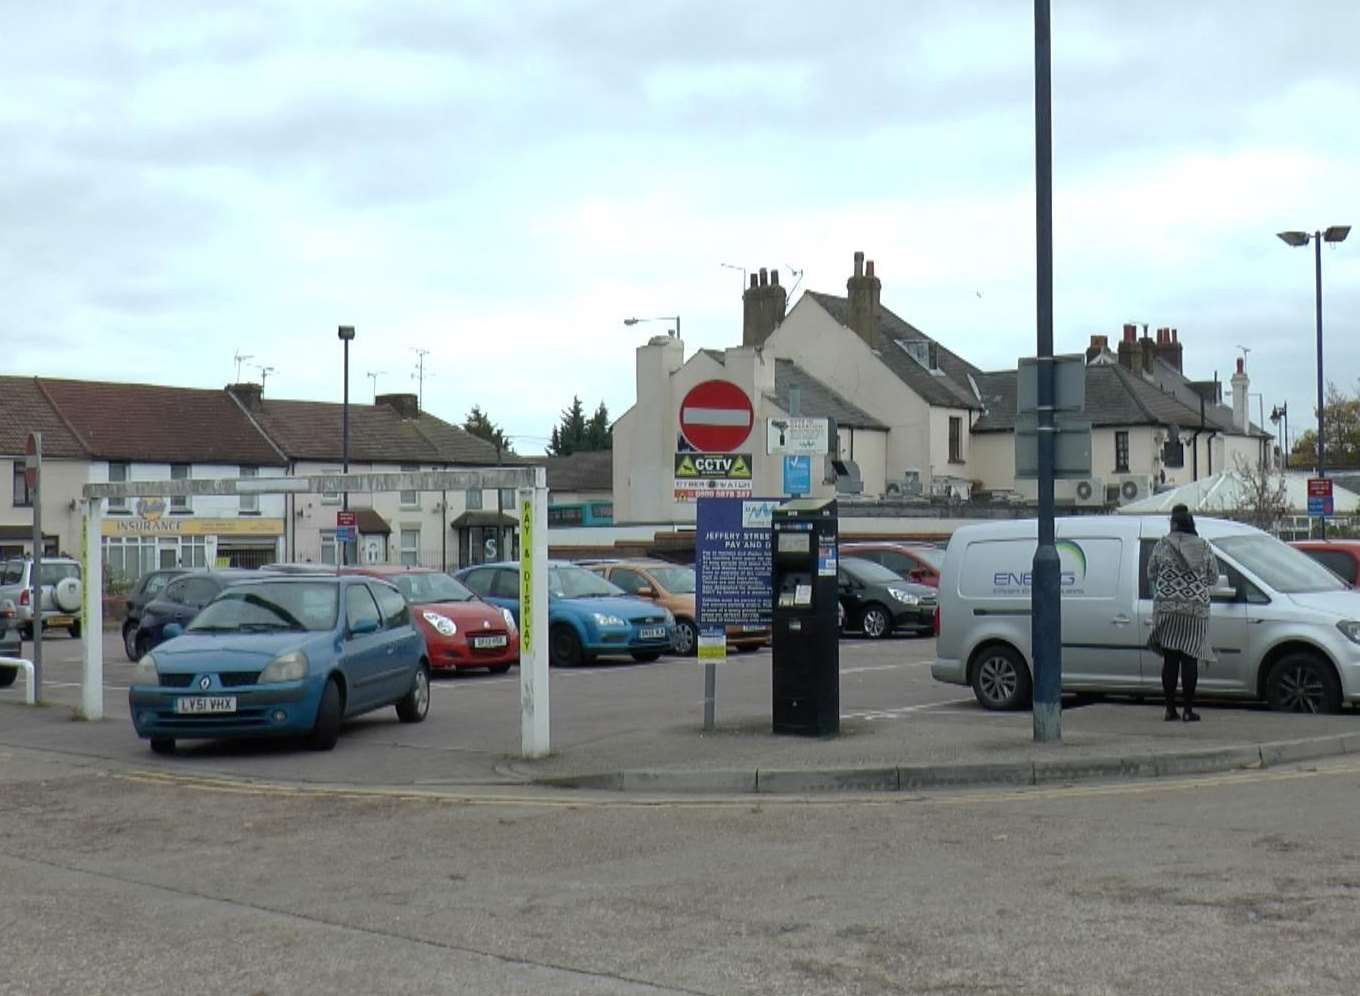 Gillingham car park where pensioner John O'connor was beaten